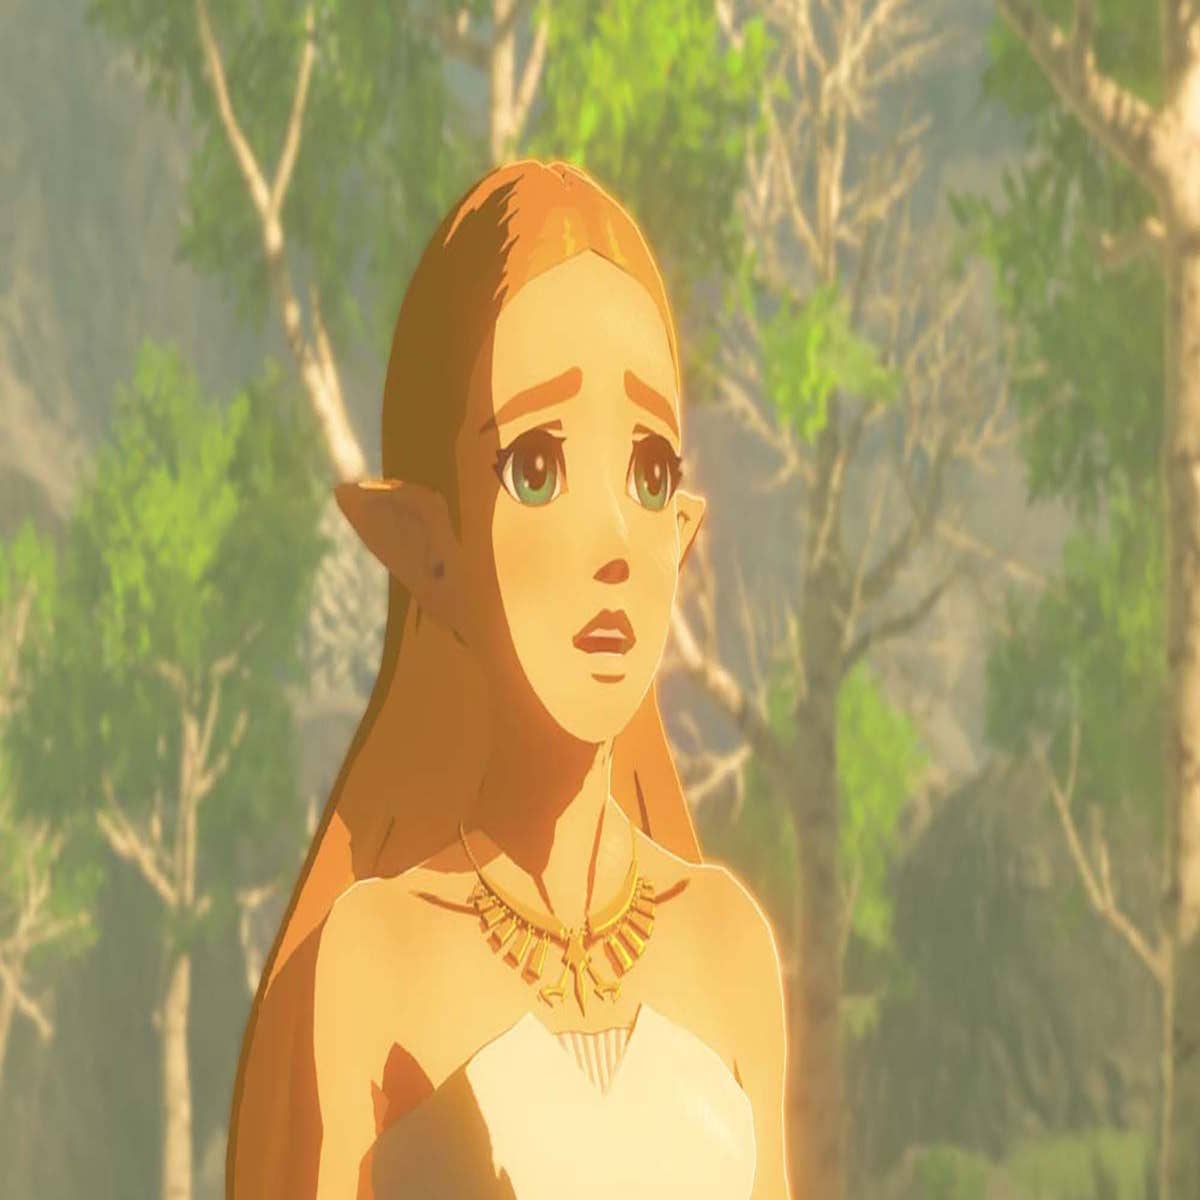 Zelda herself, voice actor Patricia Summersett, talks about Legend of Zelda:  Tears of the Kingdom